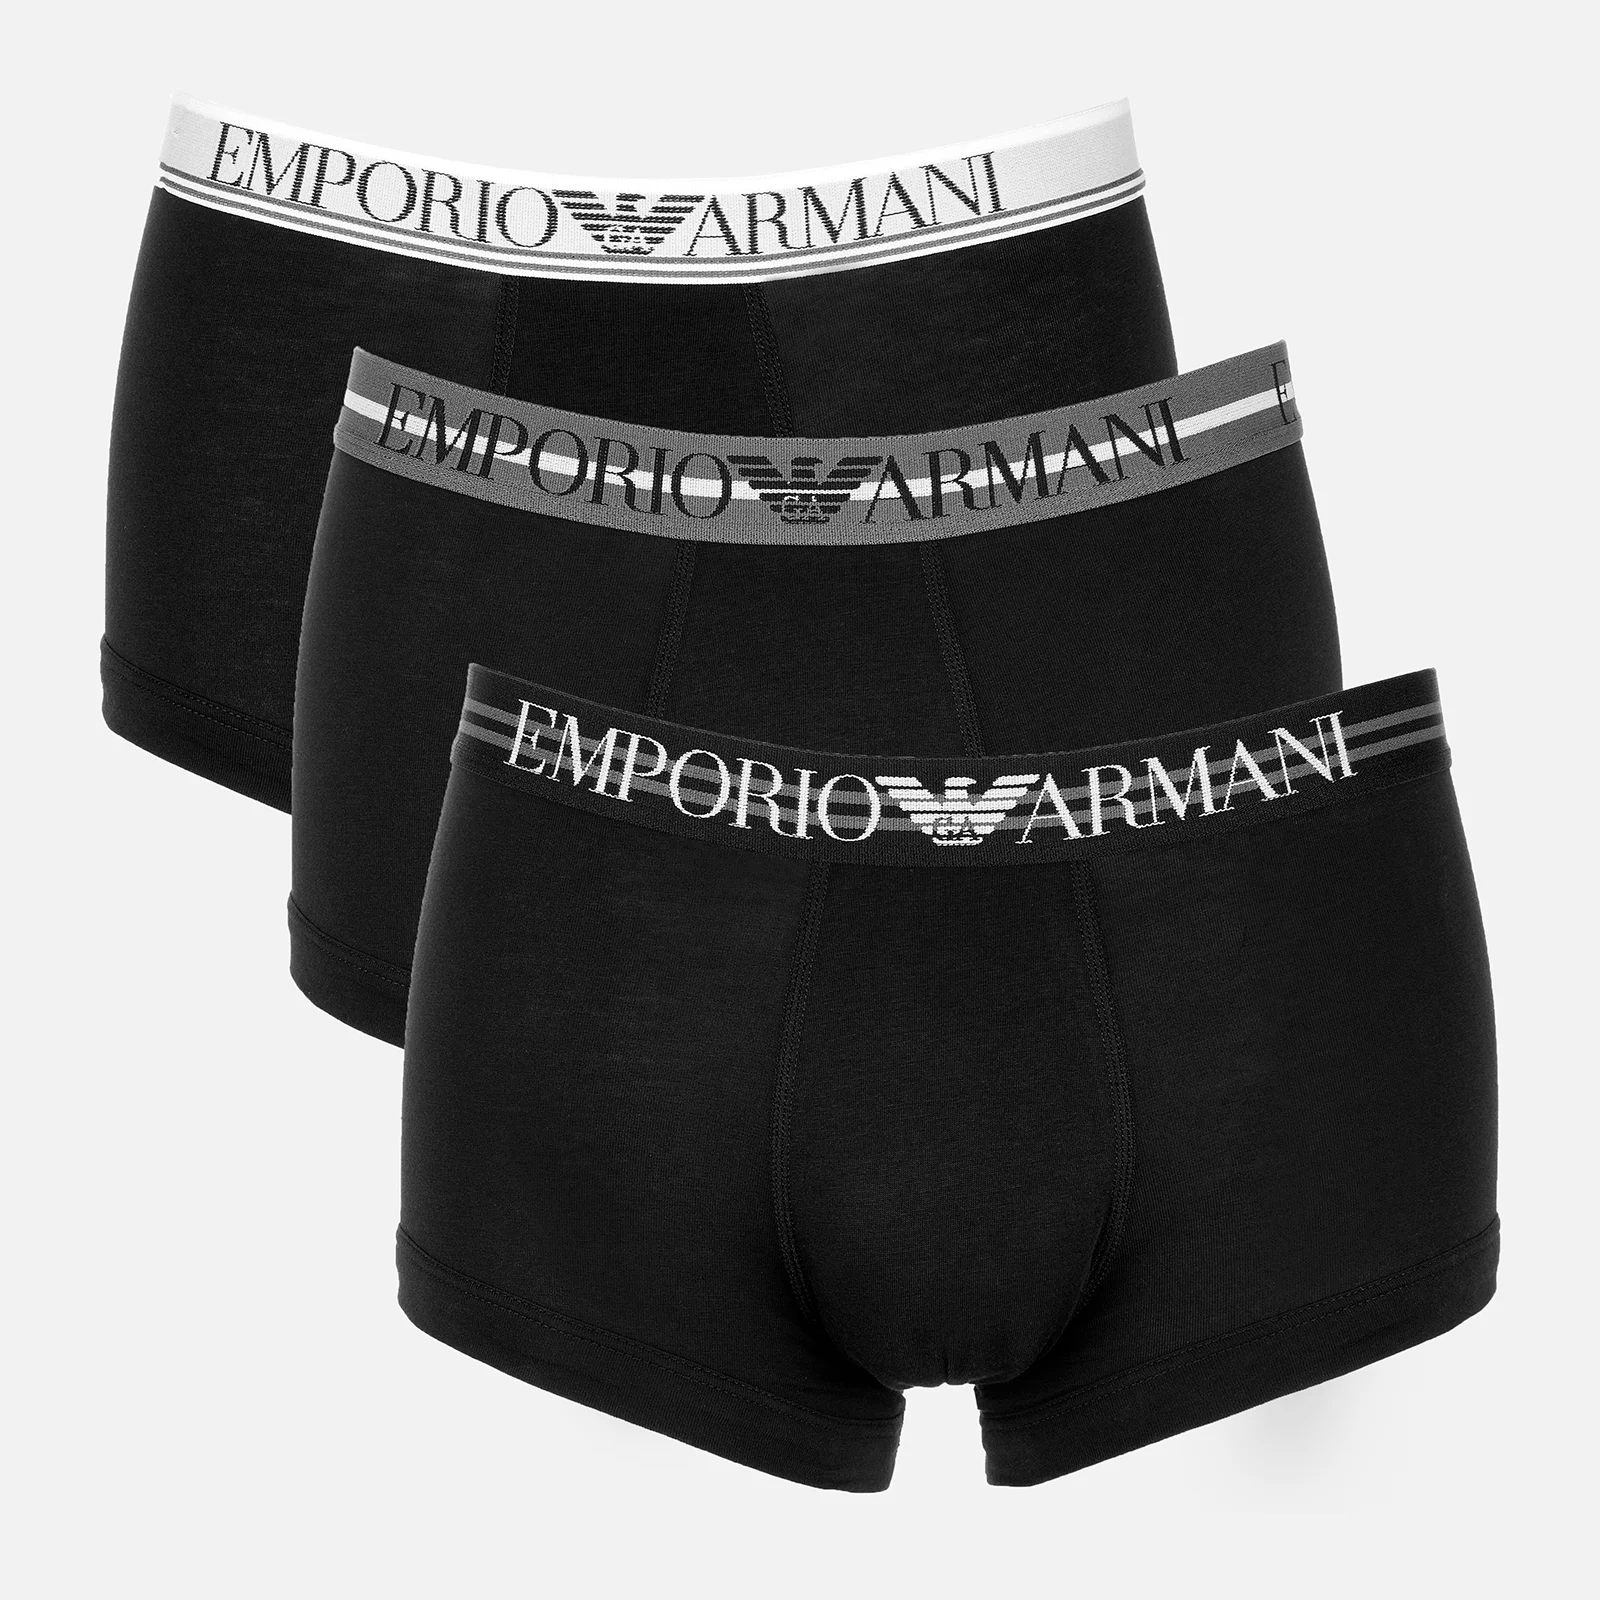 Emporio Armani Men's Mixed Waistband 3-Pack Trunks - Black Image 1